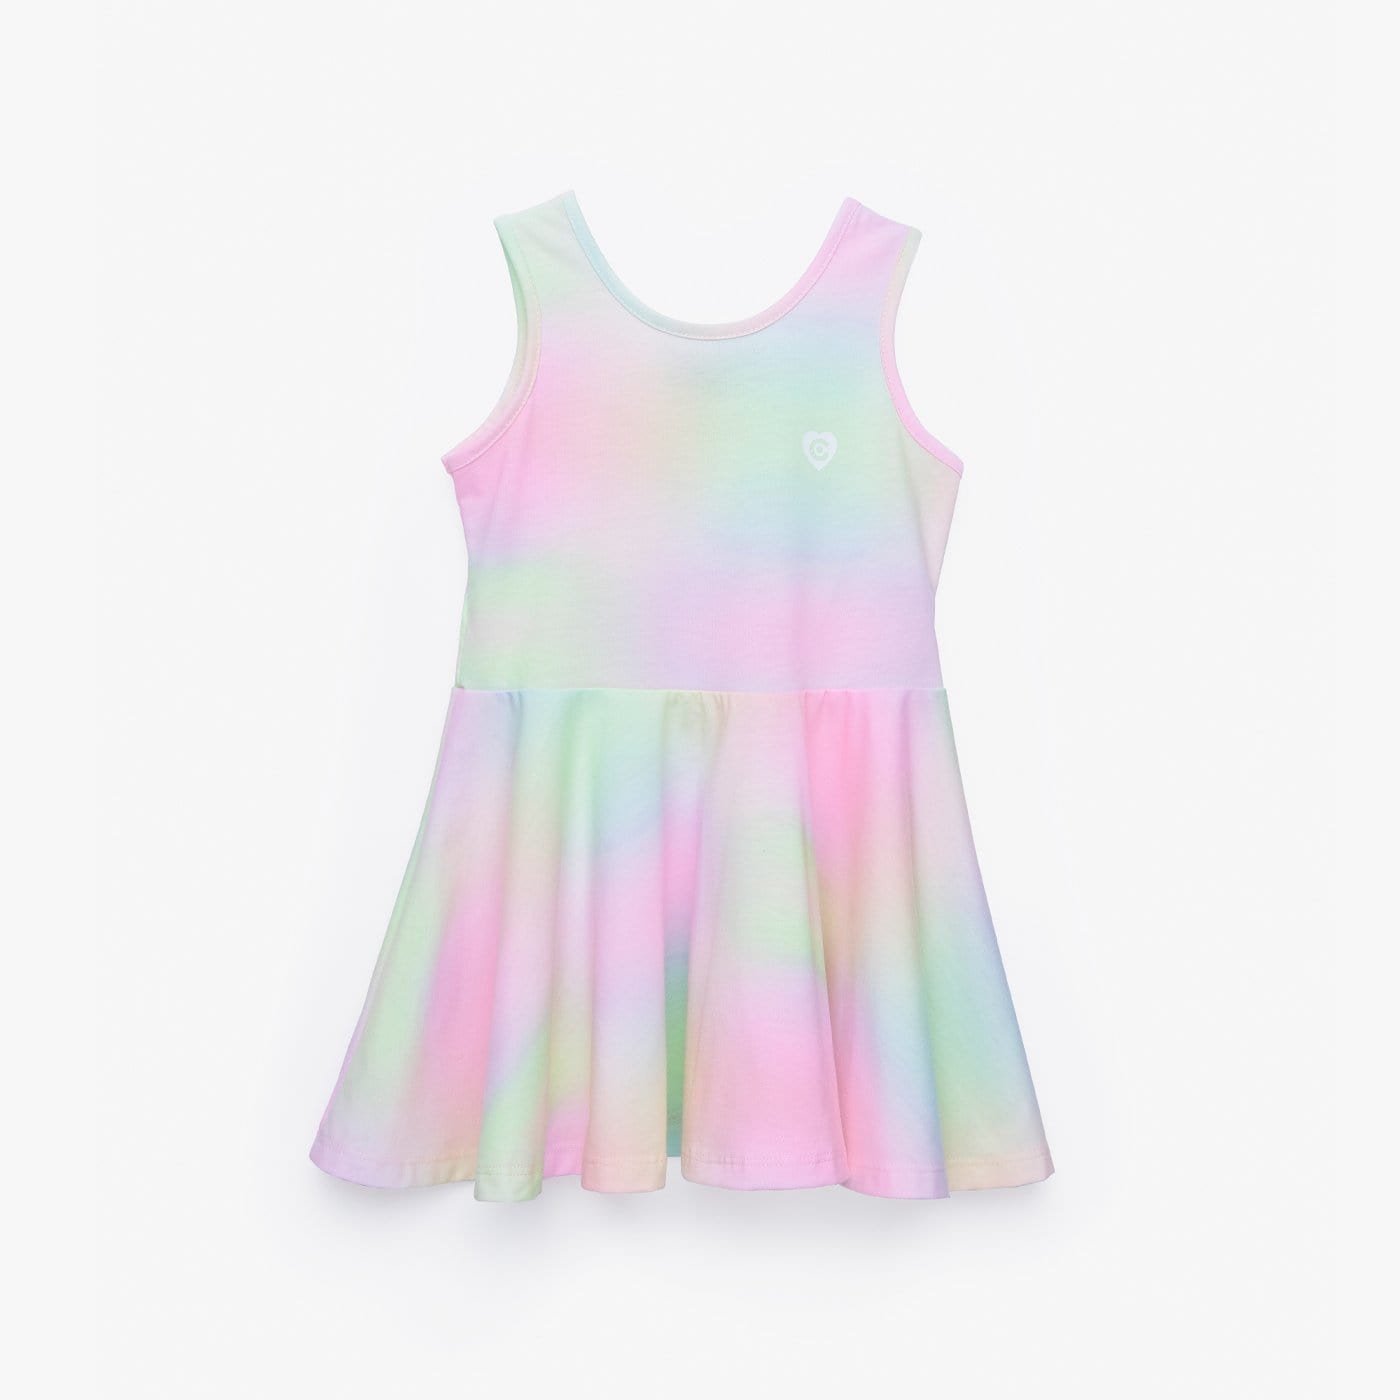 CONGUITOS TEXTIL Clothing Girl's Multi Tie Dye Skater Dress